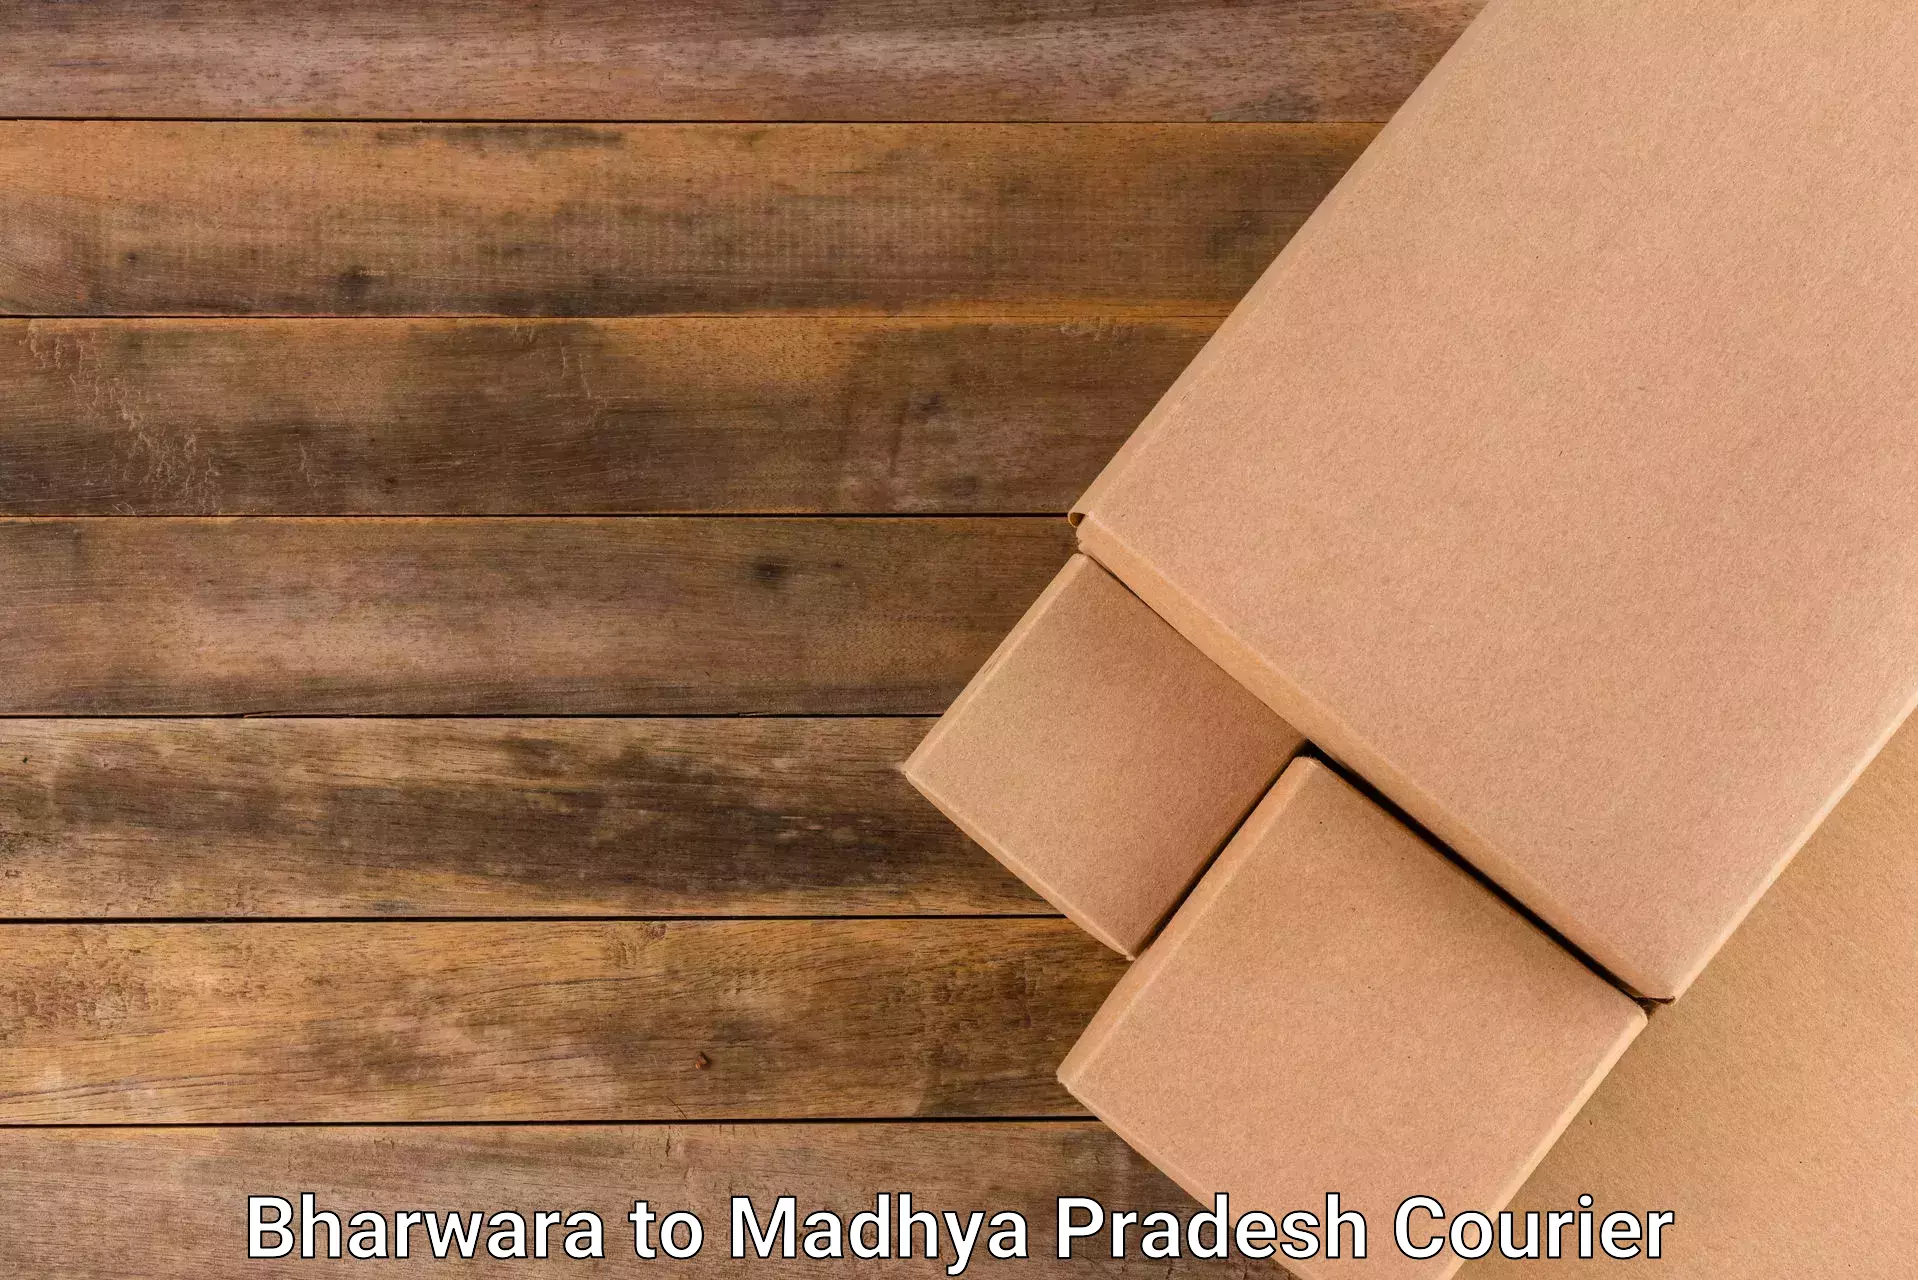 Digital courier platforms Bharwara to Amla